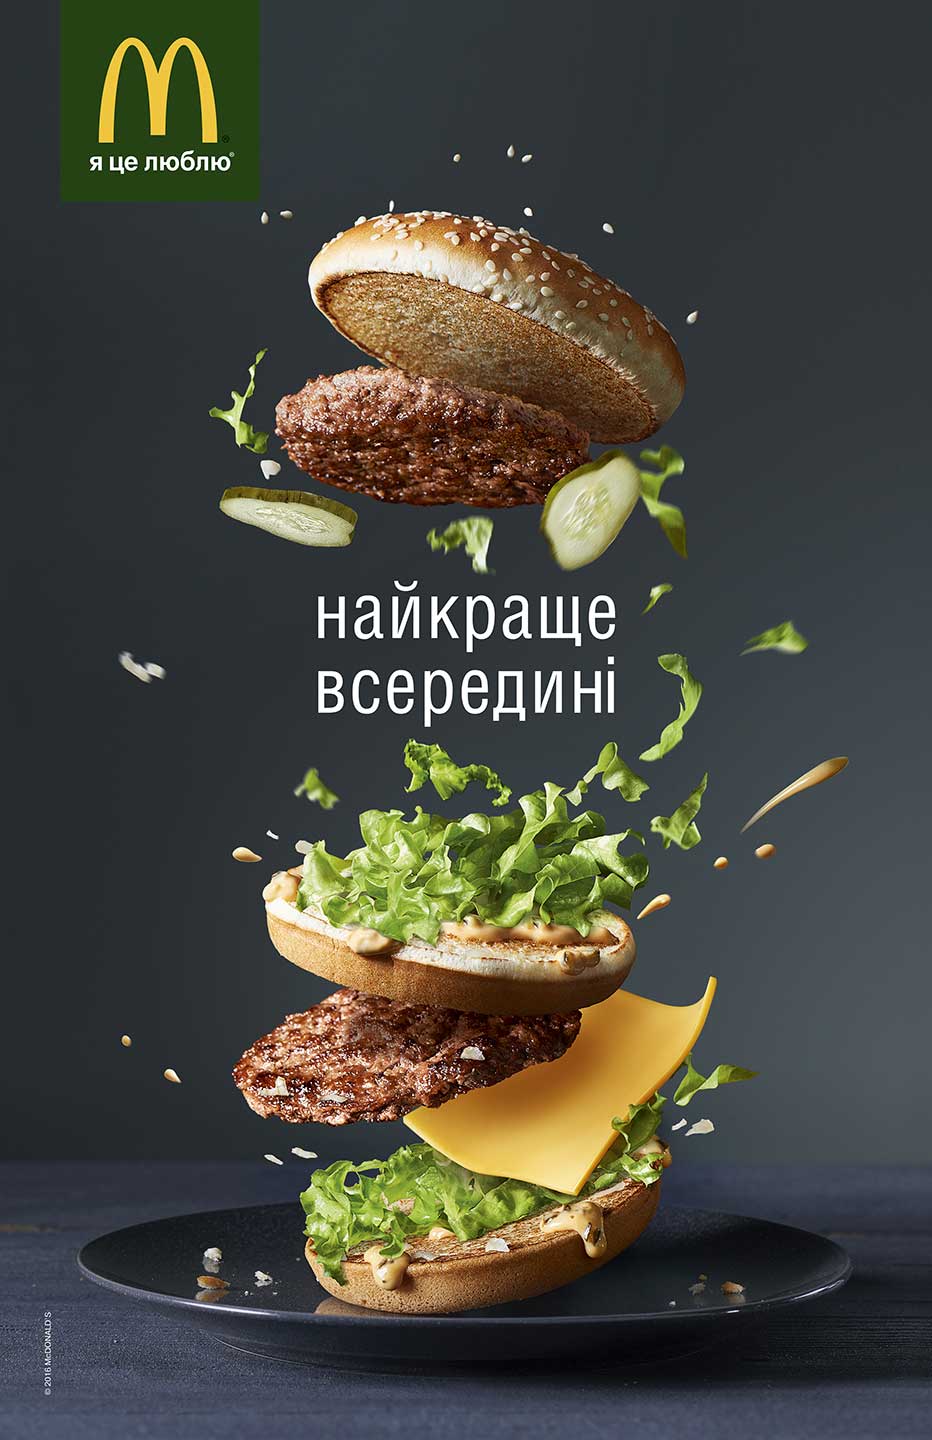 kiev-burger-web